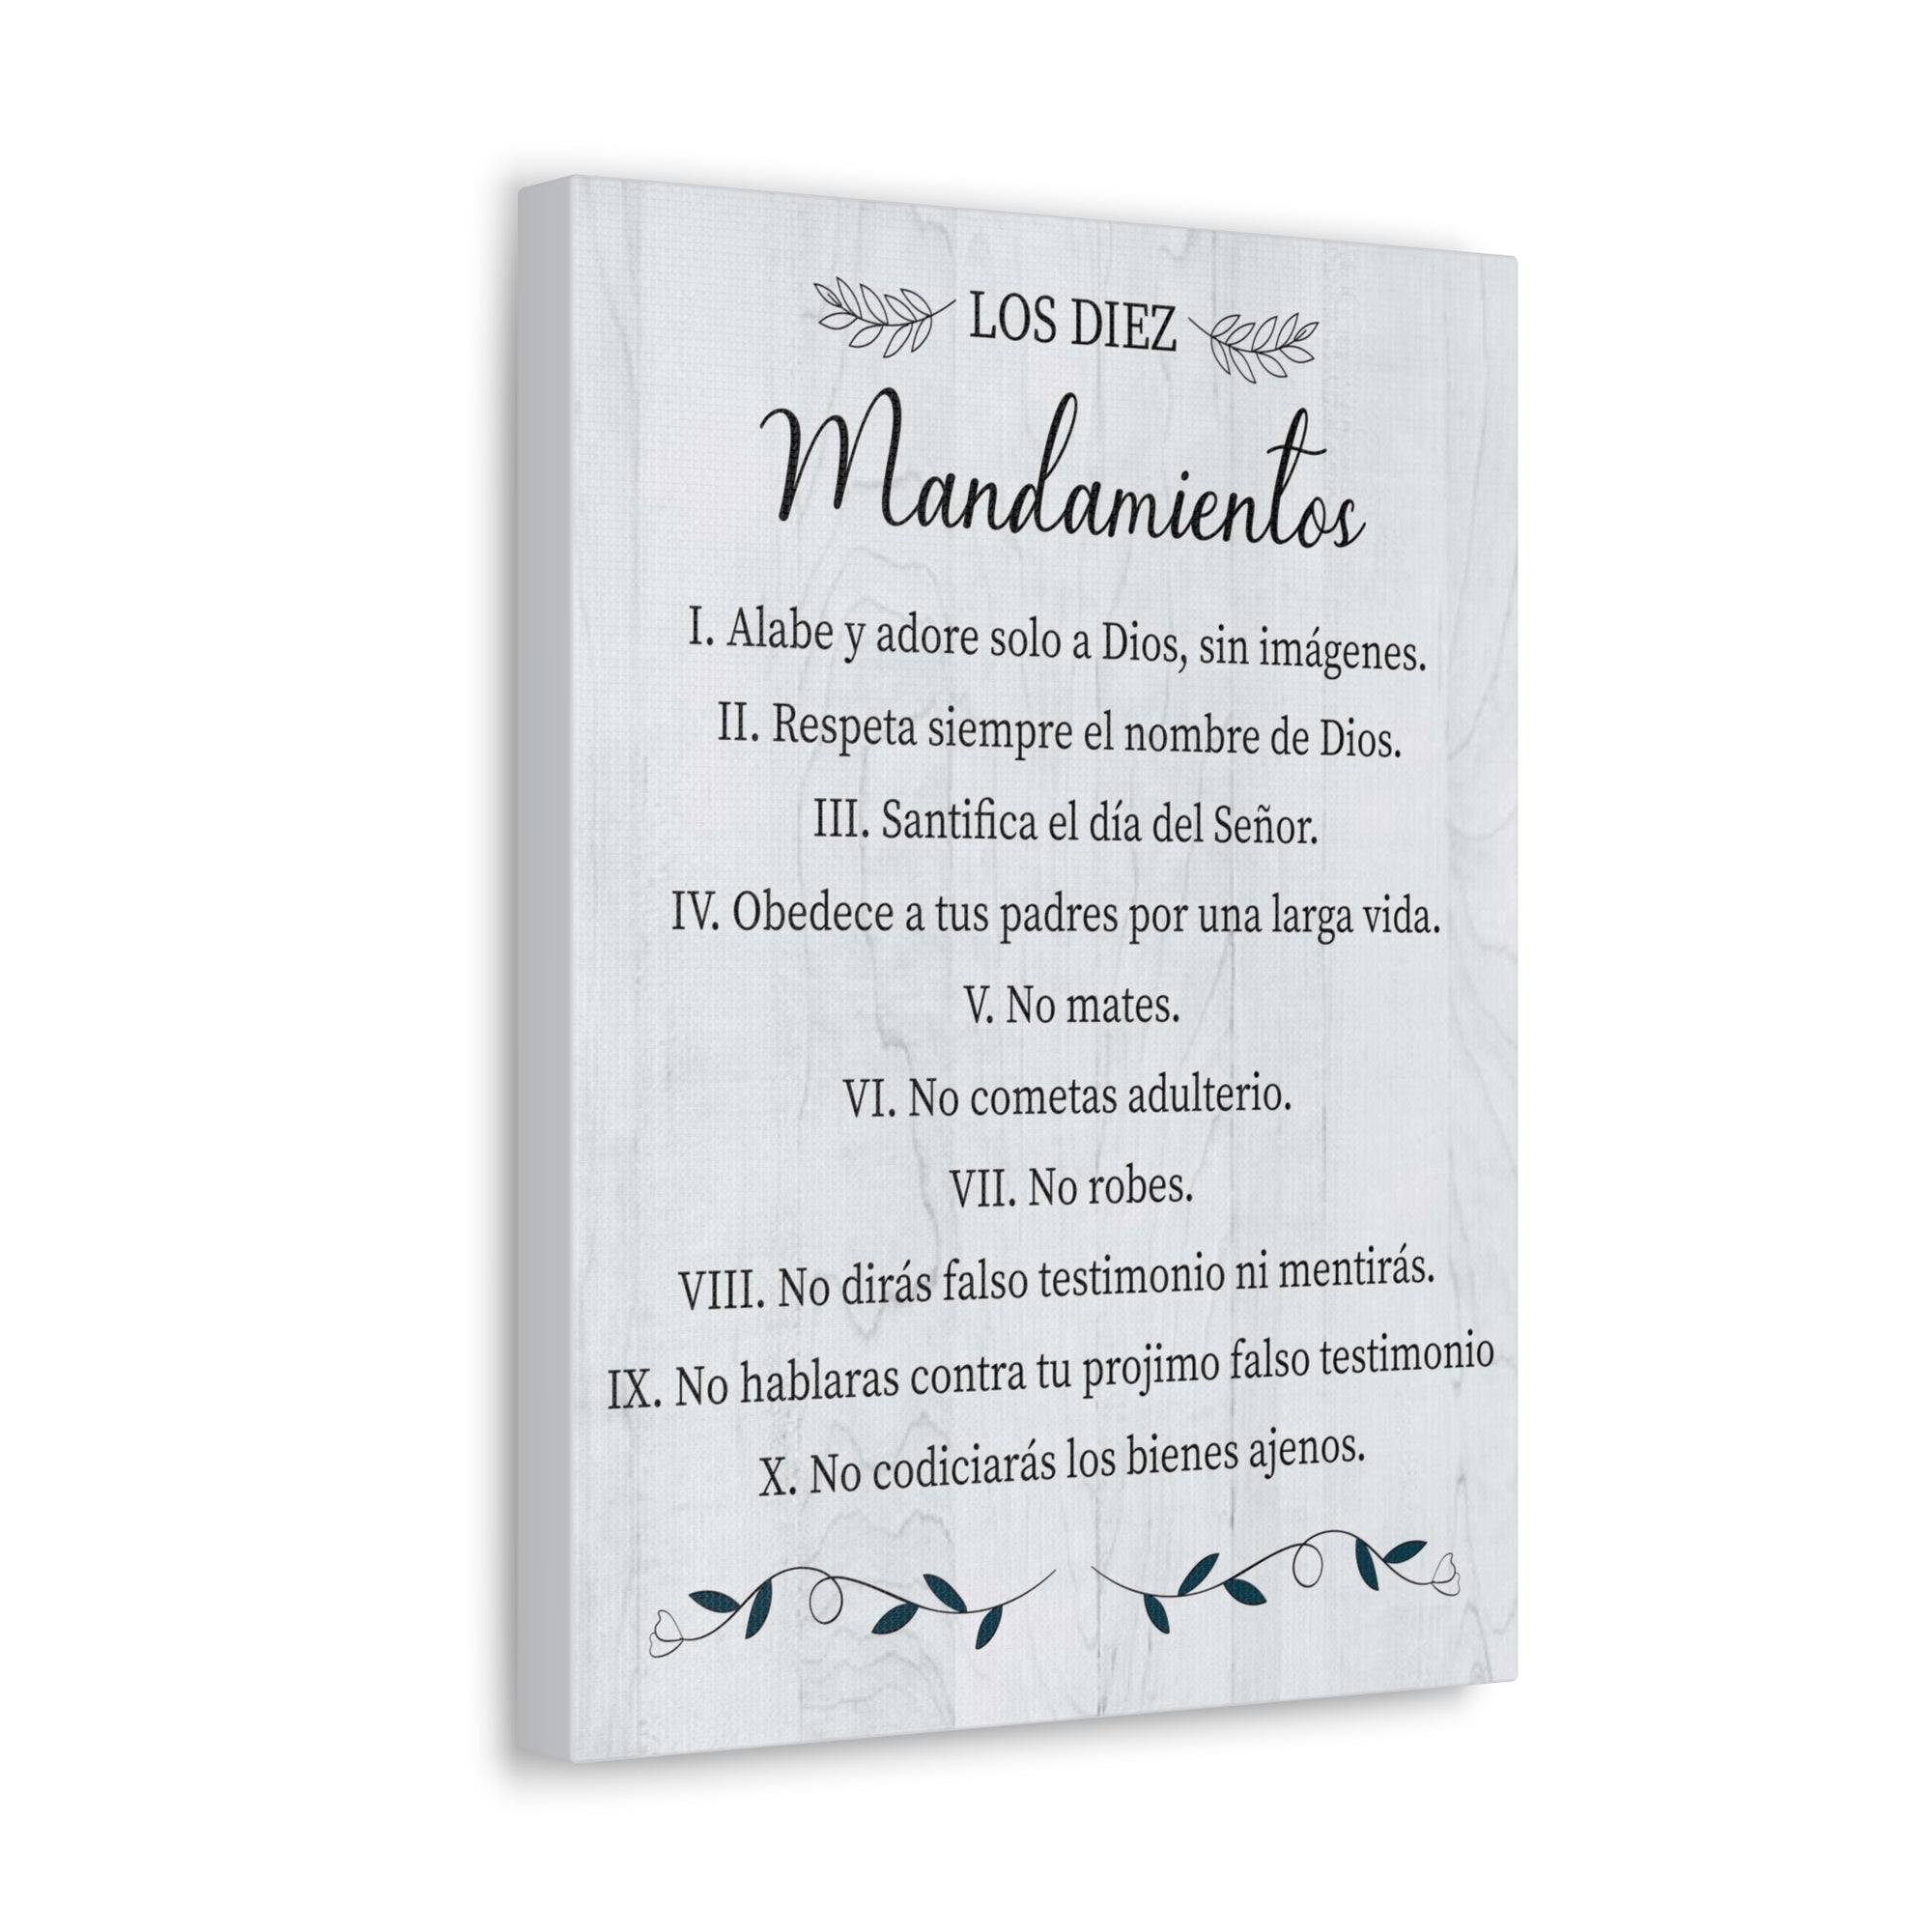 Los Diez Mandamientos 10 Commandments Exodus 20:2-17 Spanish Portrait Christian Wall Art Bible Verse Print Ready to Hang-Express Your Love Gifts